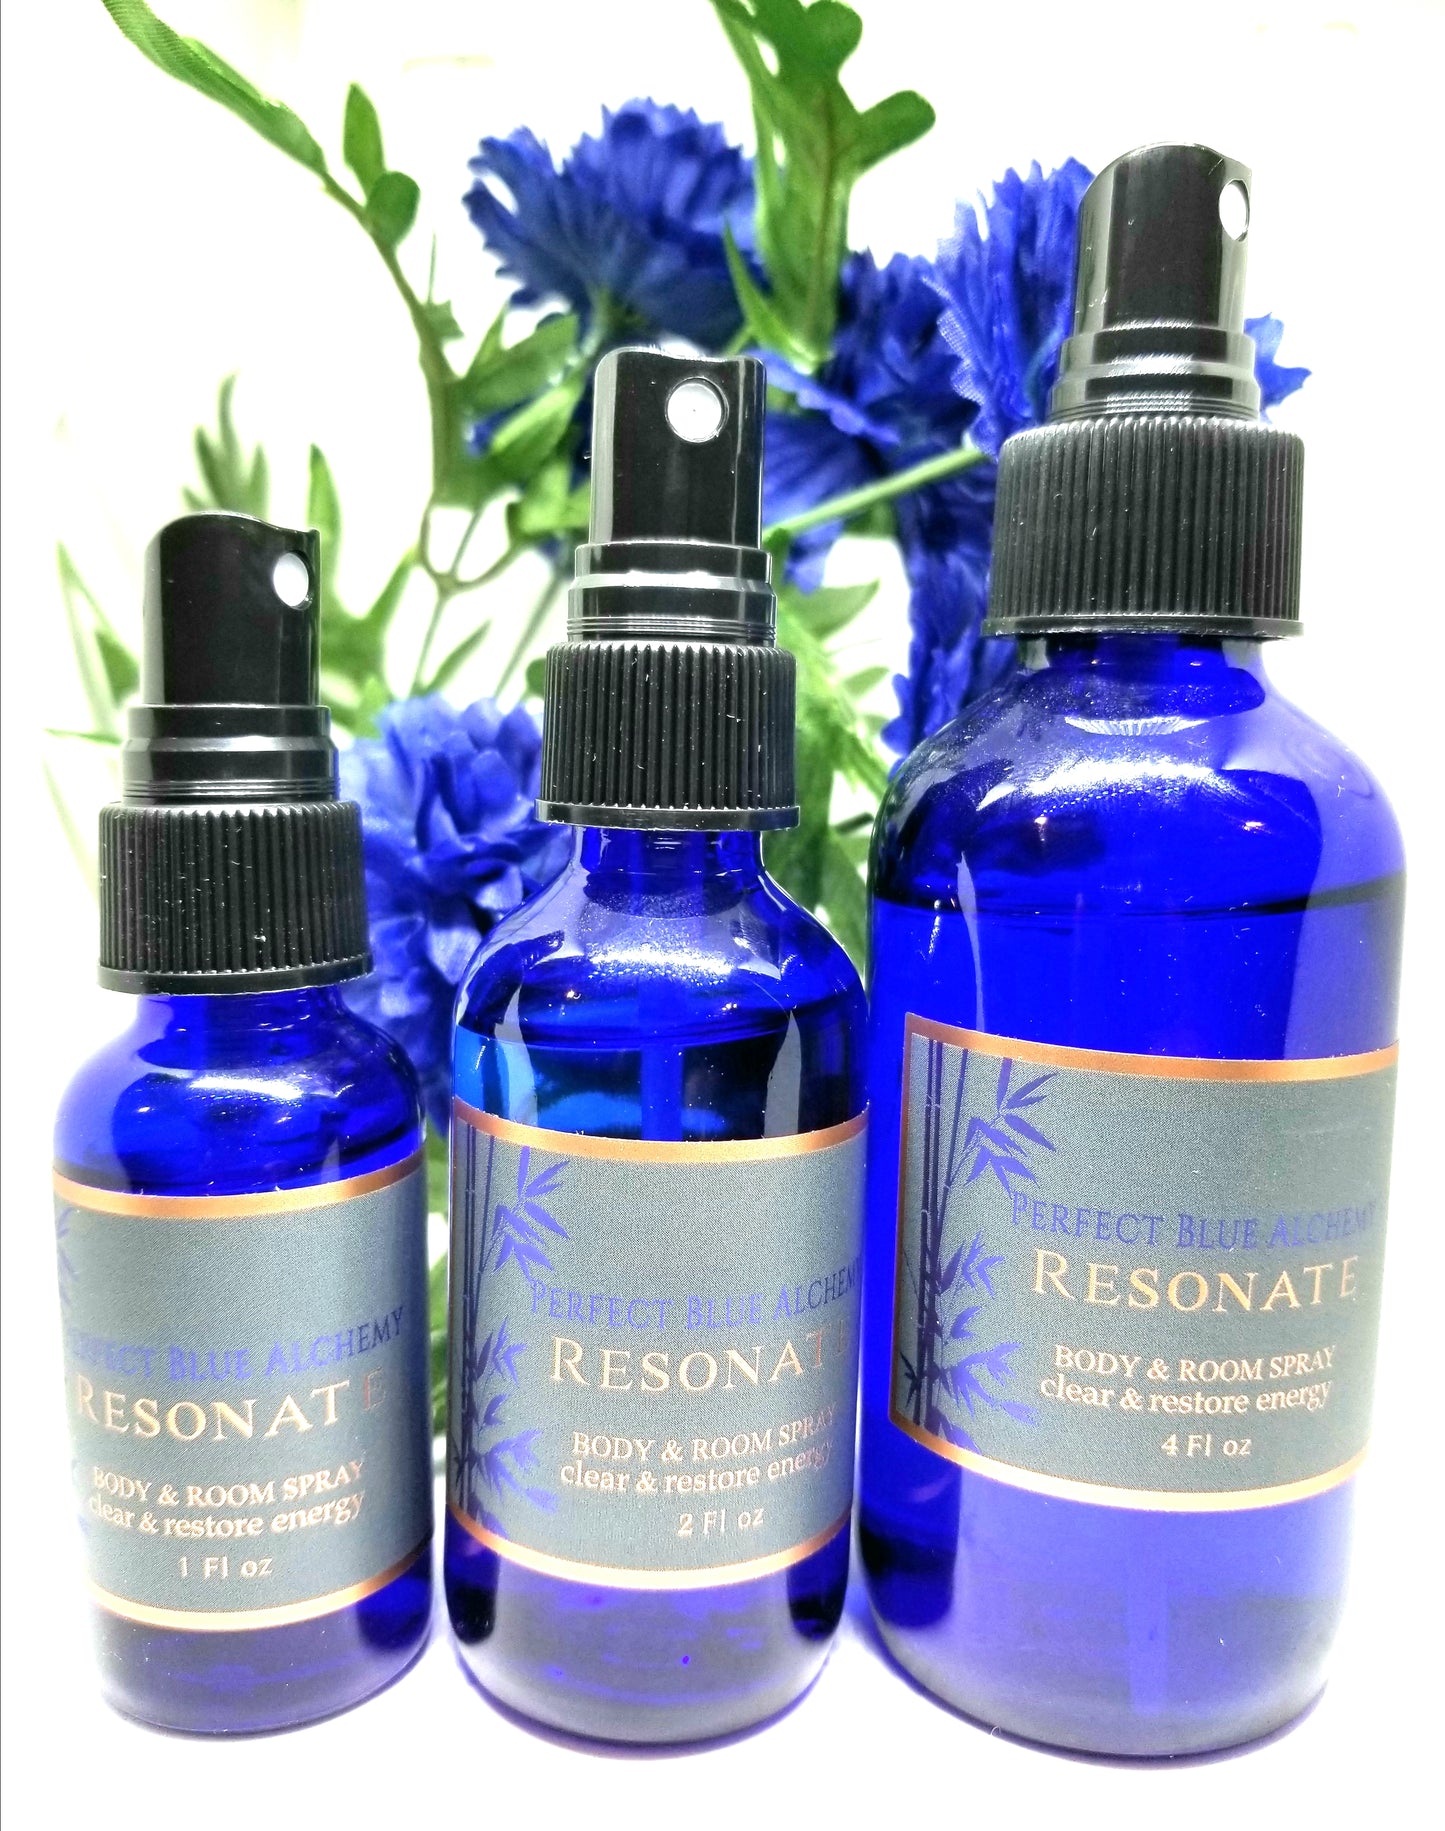 Resonate Perfume Body & Room Spray - clear & restore energy